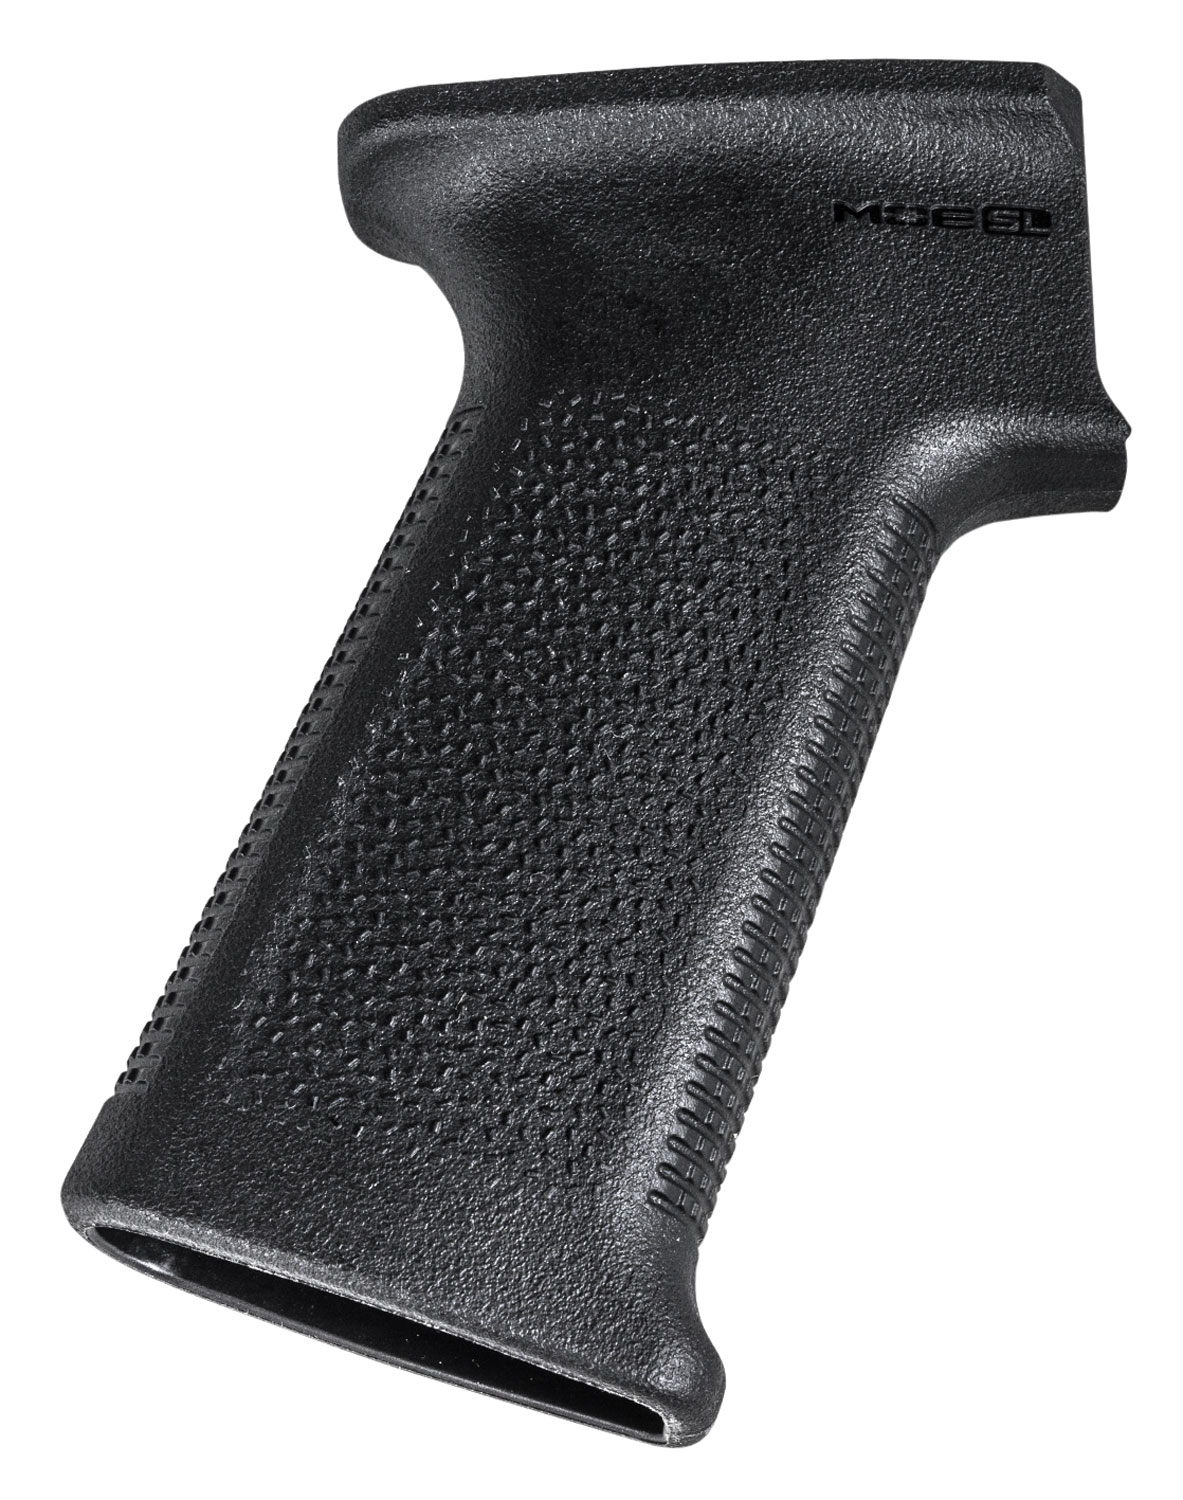 Magpul MAG682-BLK MOE SL Grip Aggressive Textured Black Polymer for AK-47, AK-74